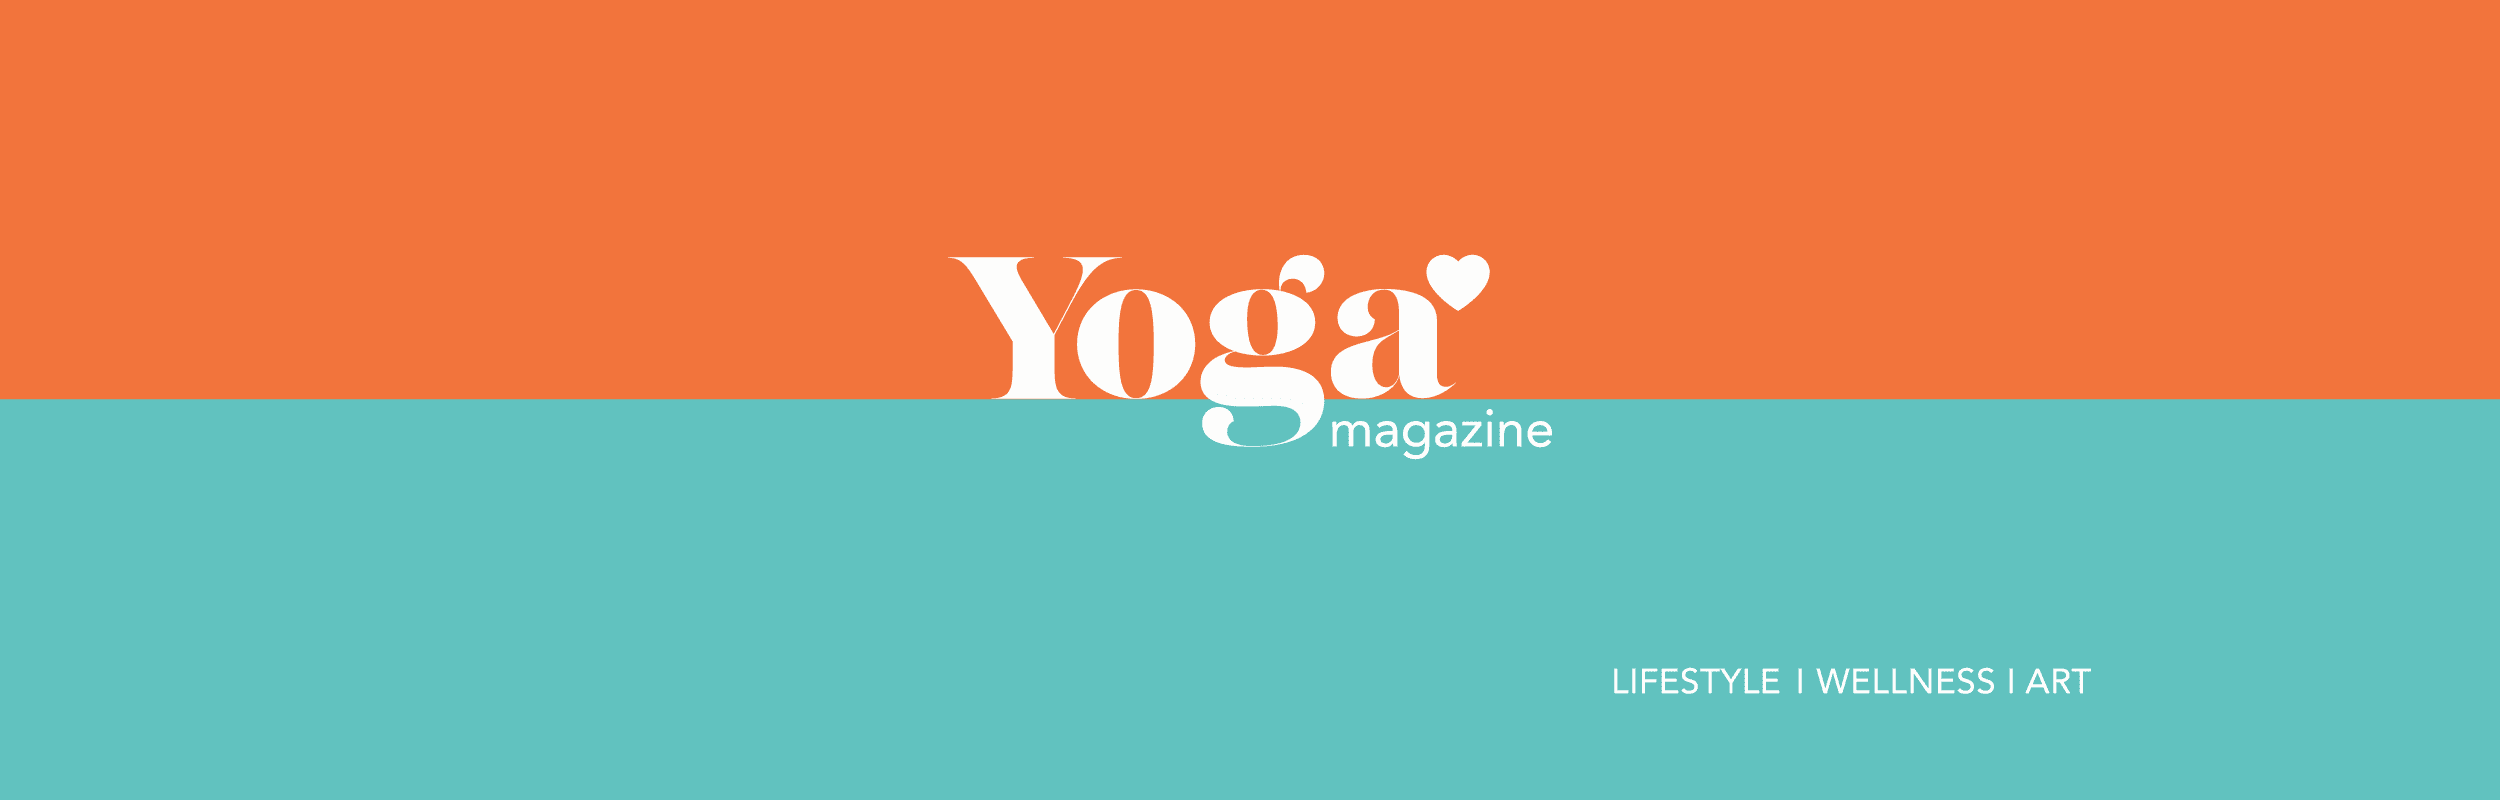 YOGA⁺ Magazine is a free print and digital magazine celebrating yoga, art, music, wellness and lifestyle.